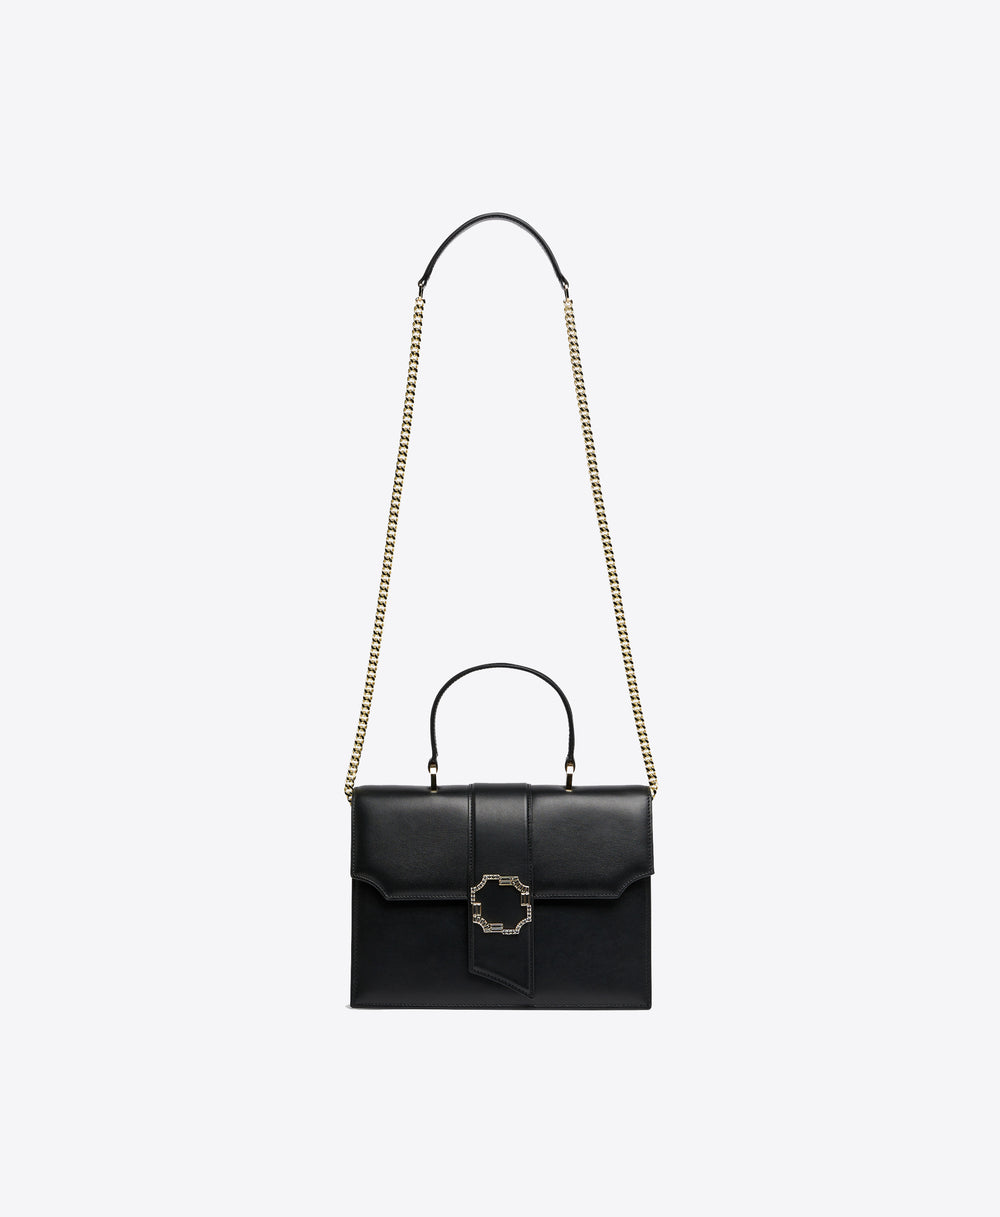 Women's Audrey Black Leather Square Handbag Malone Souliers